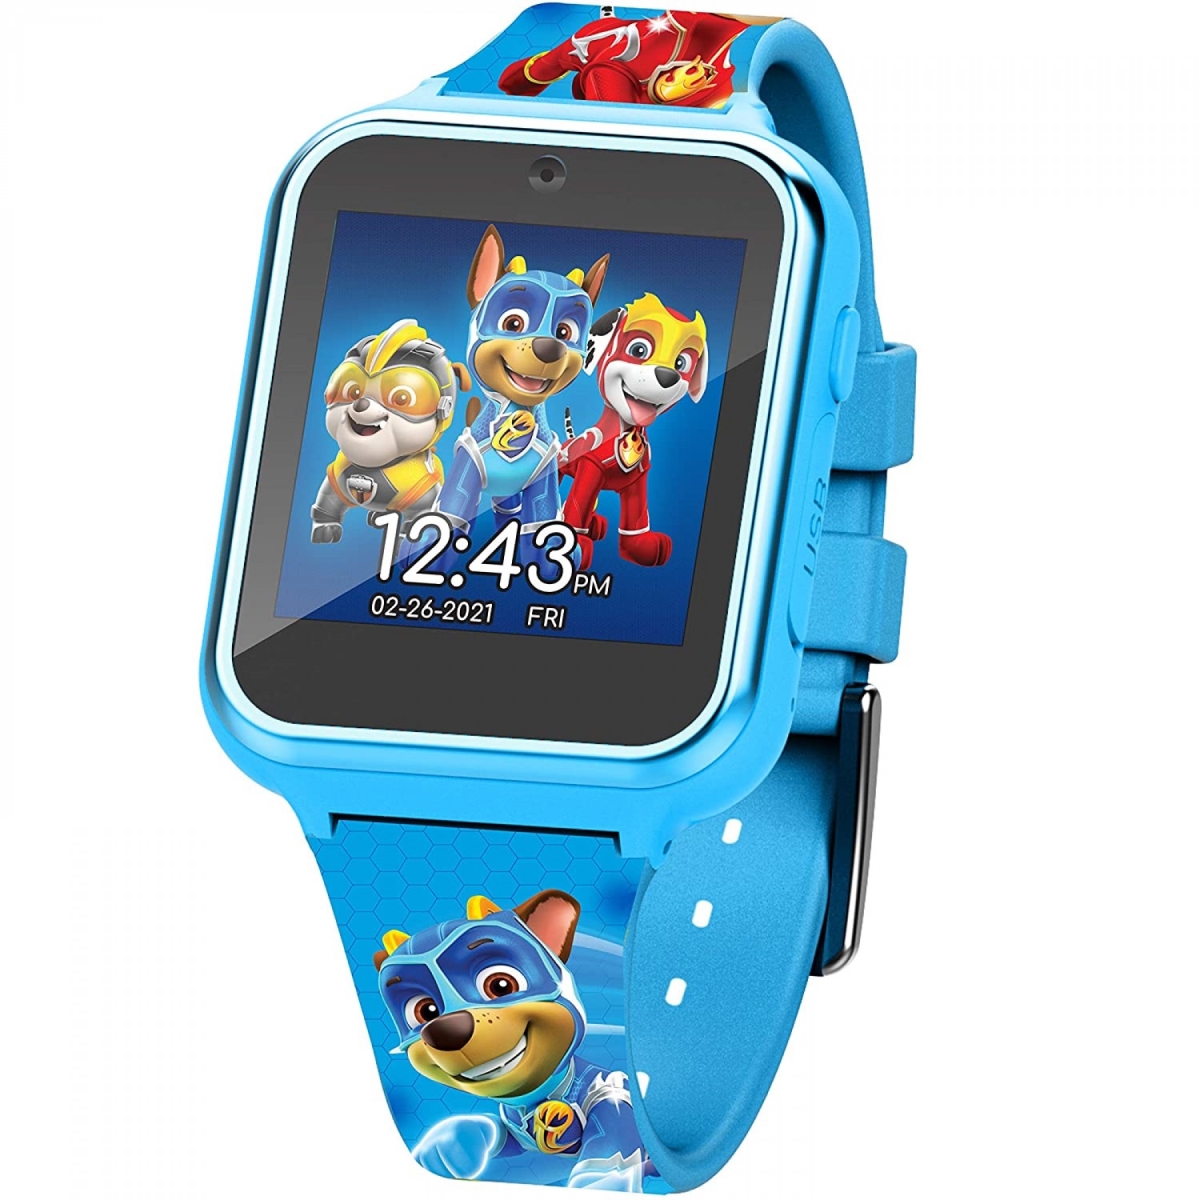 Hardware Dart Accutime Interactive Kids Watch, Blue